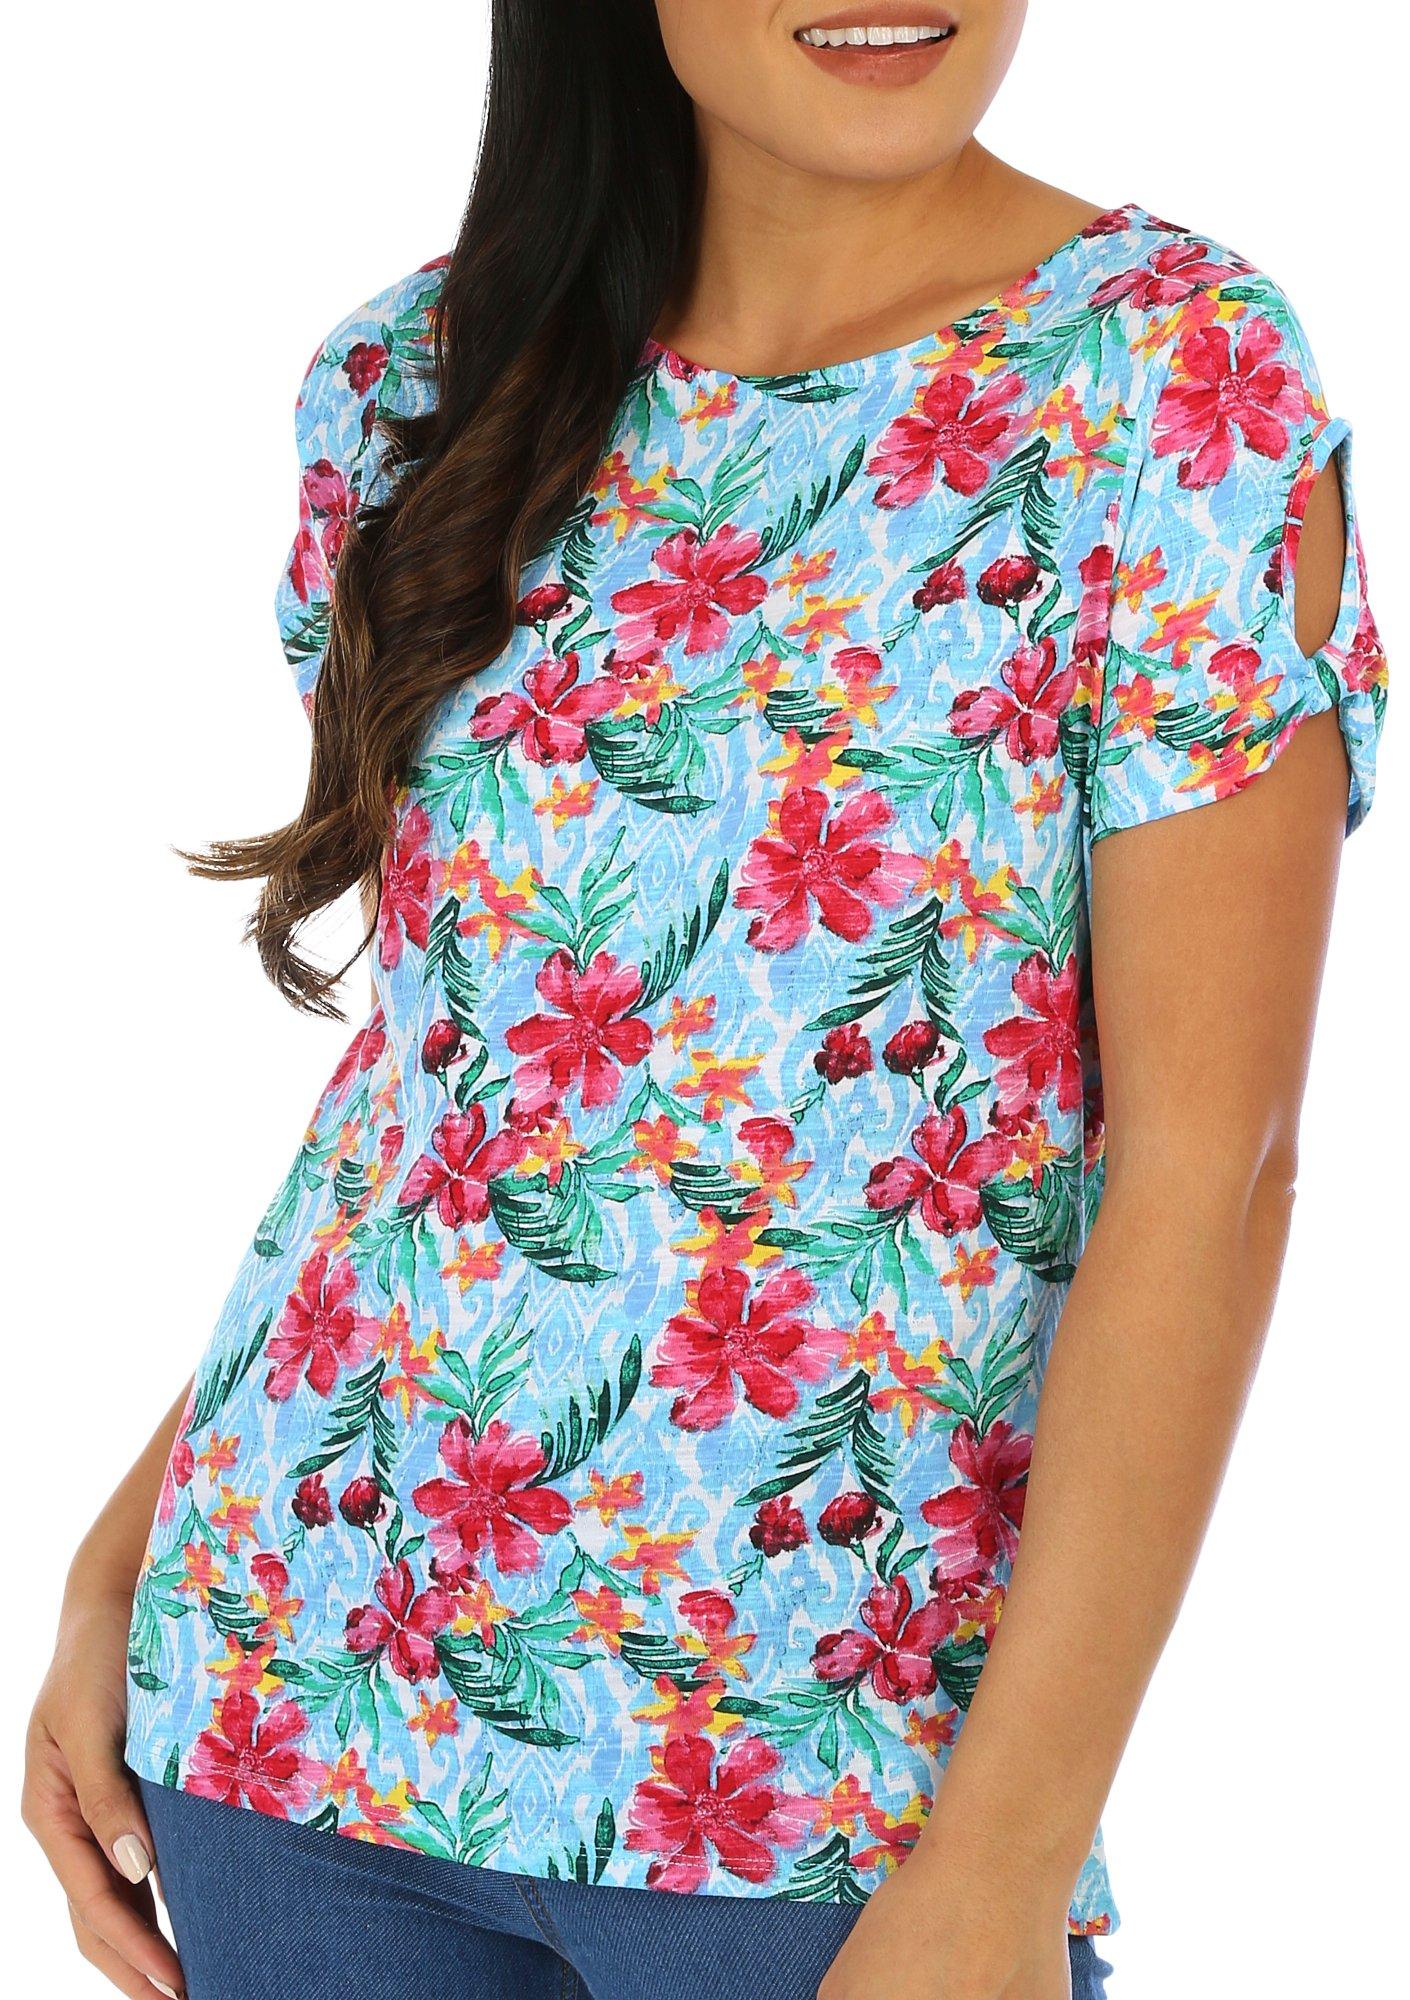 Womens Tropical Print Short Sleeve Top